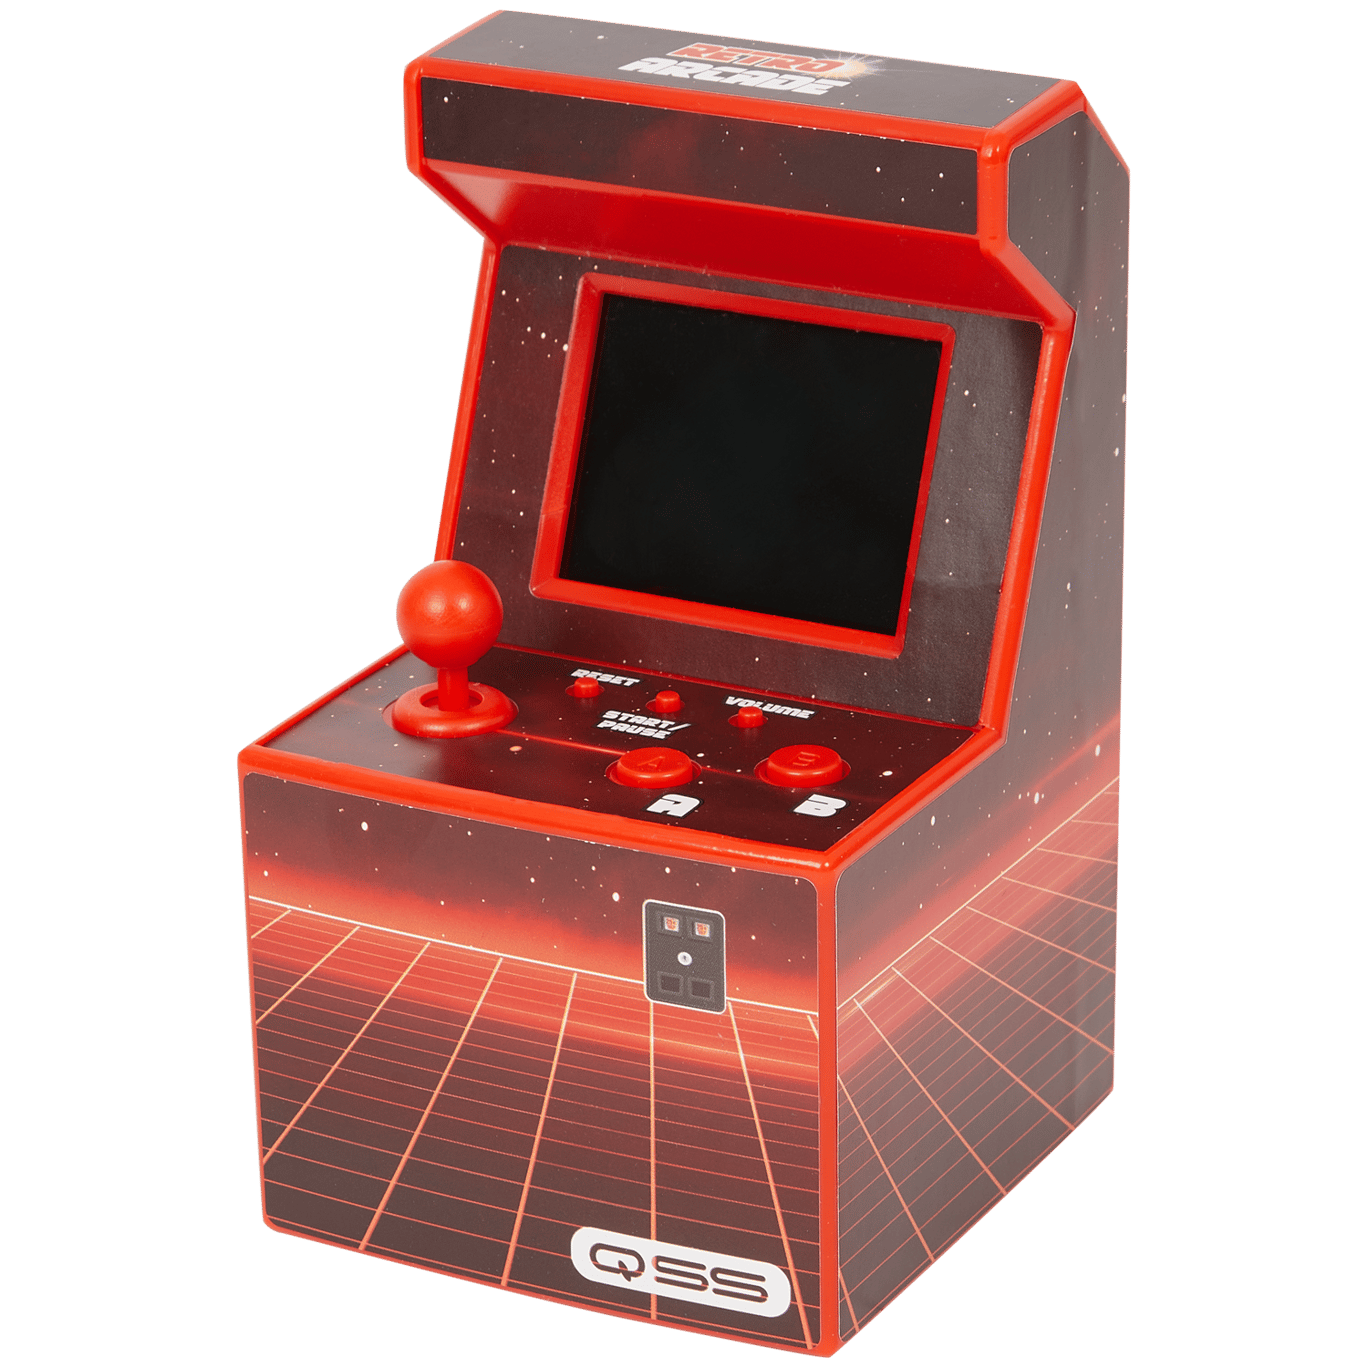 QSS Mini-Arcade-Spielautomat